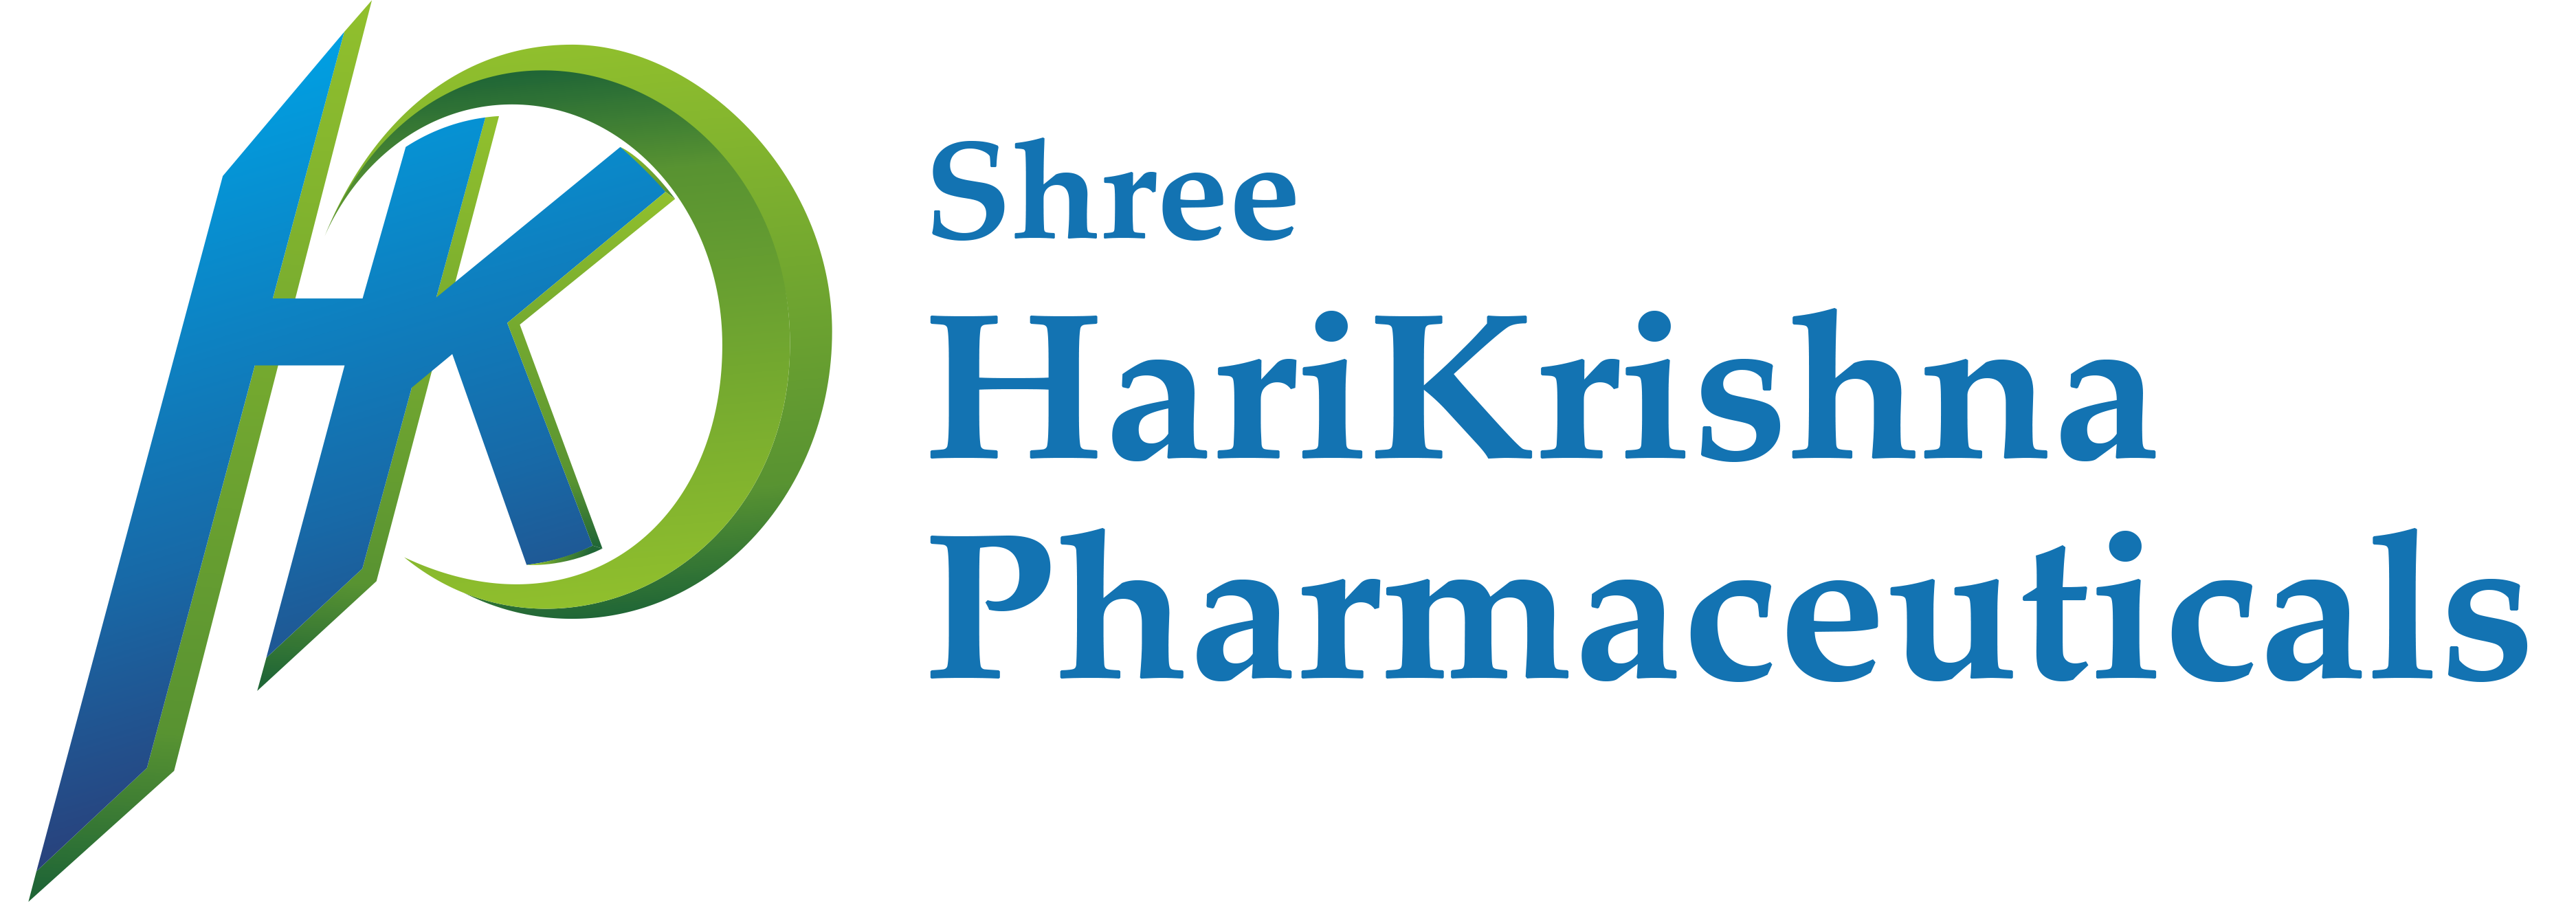 Logo - Shree Hari Logo Transparent PNG - 1831x1028 - Free Download on  NicePNG